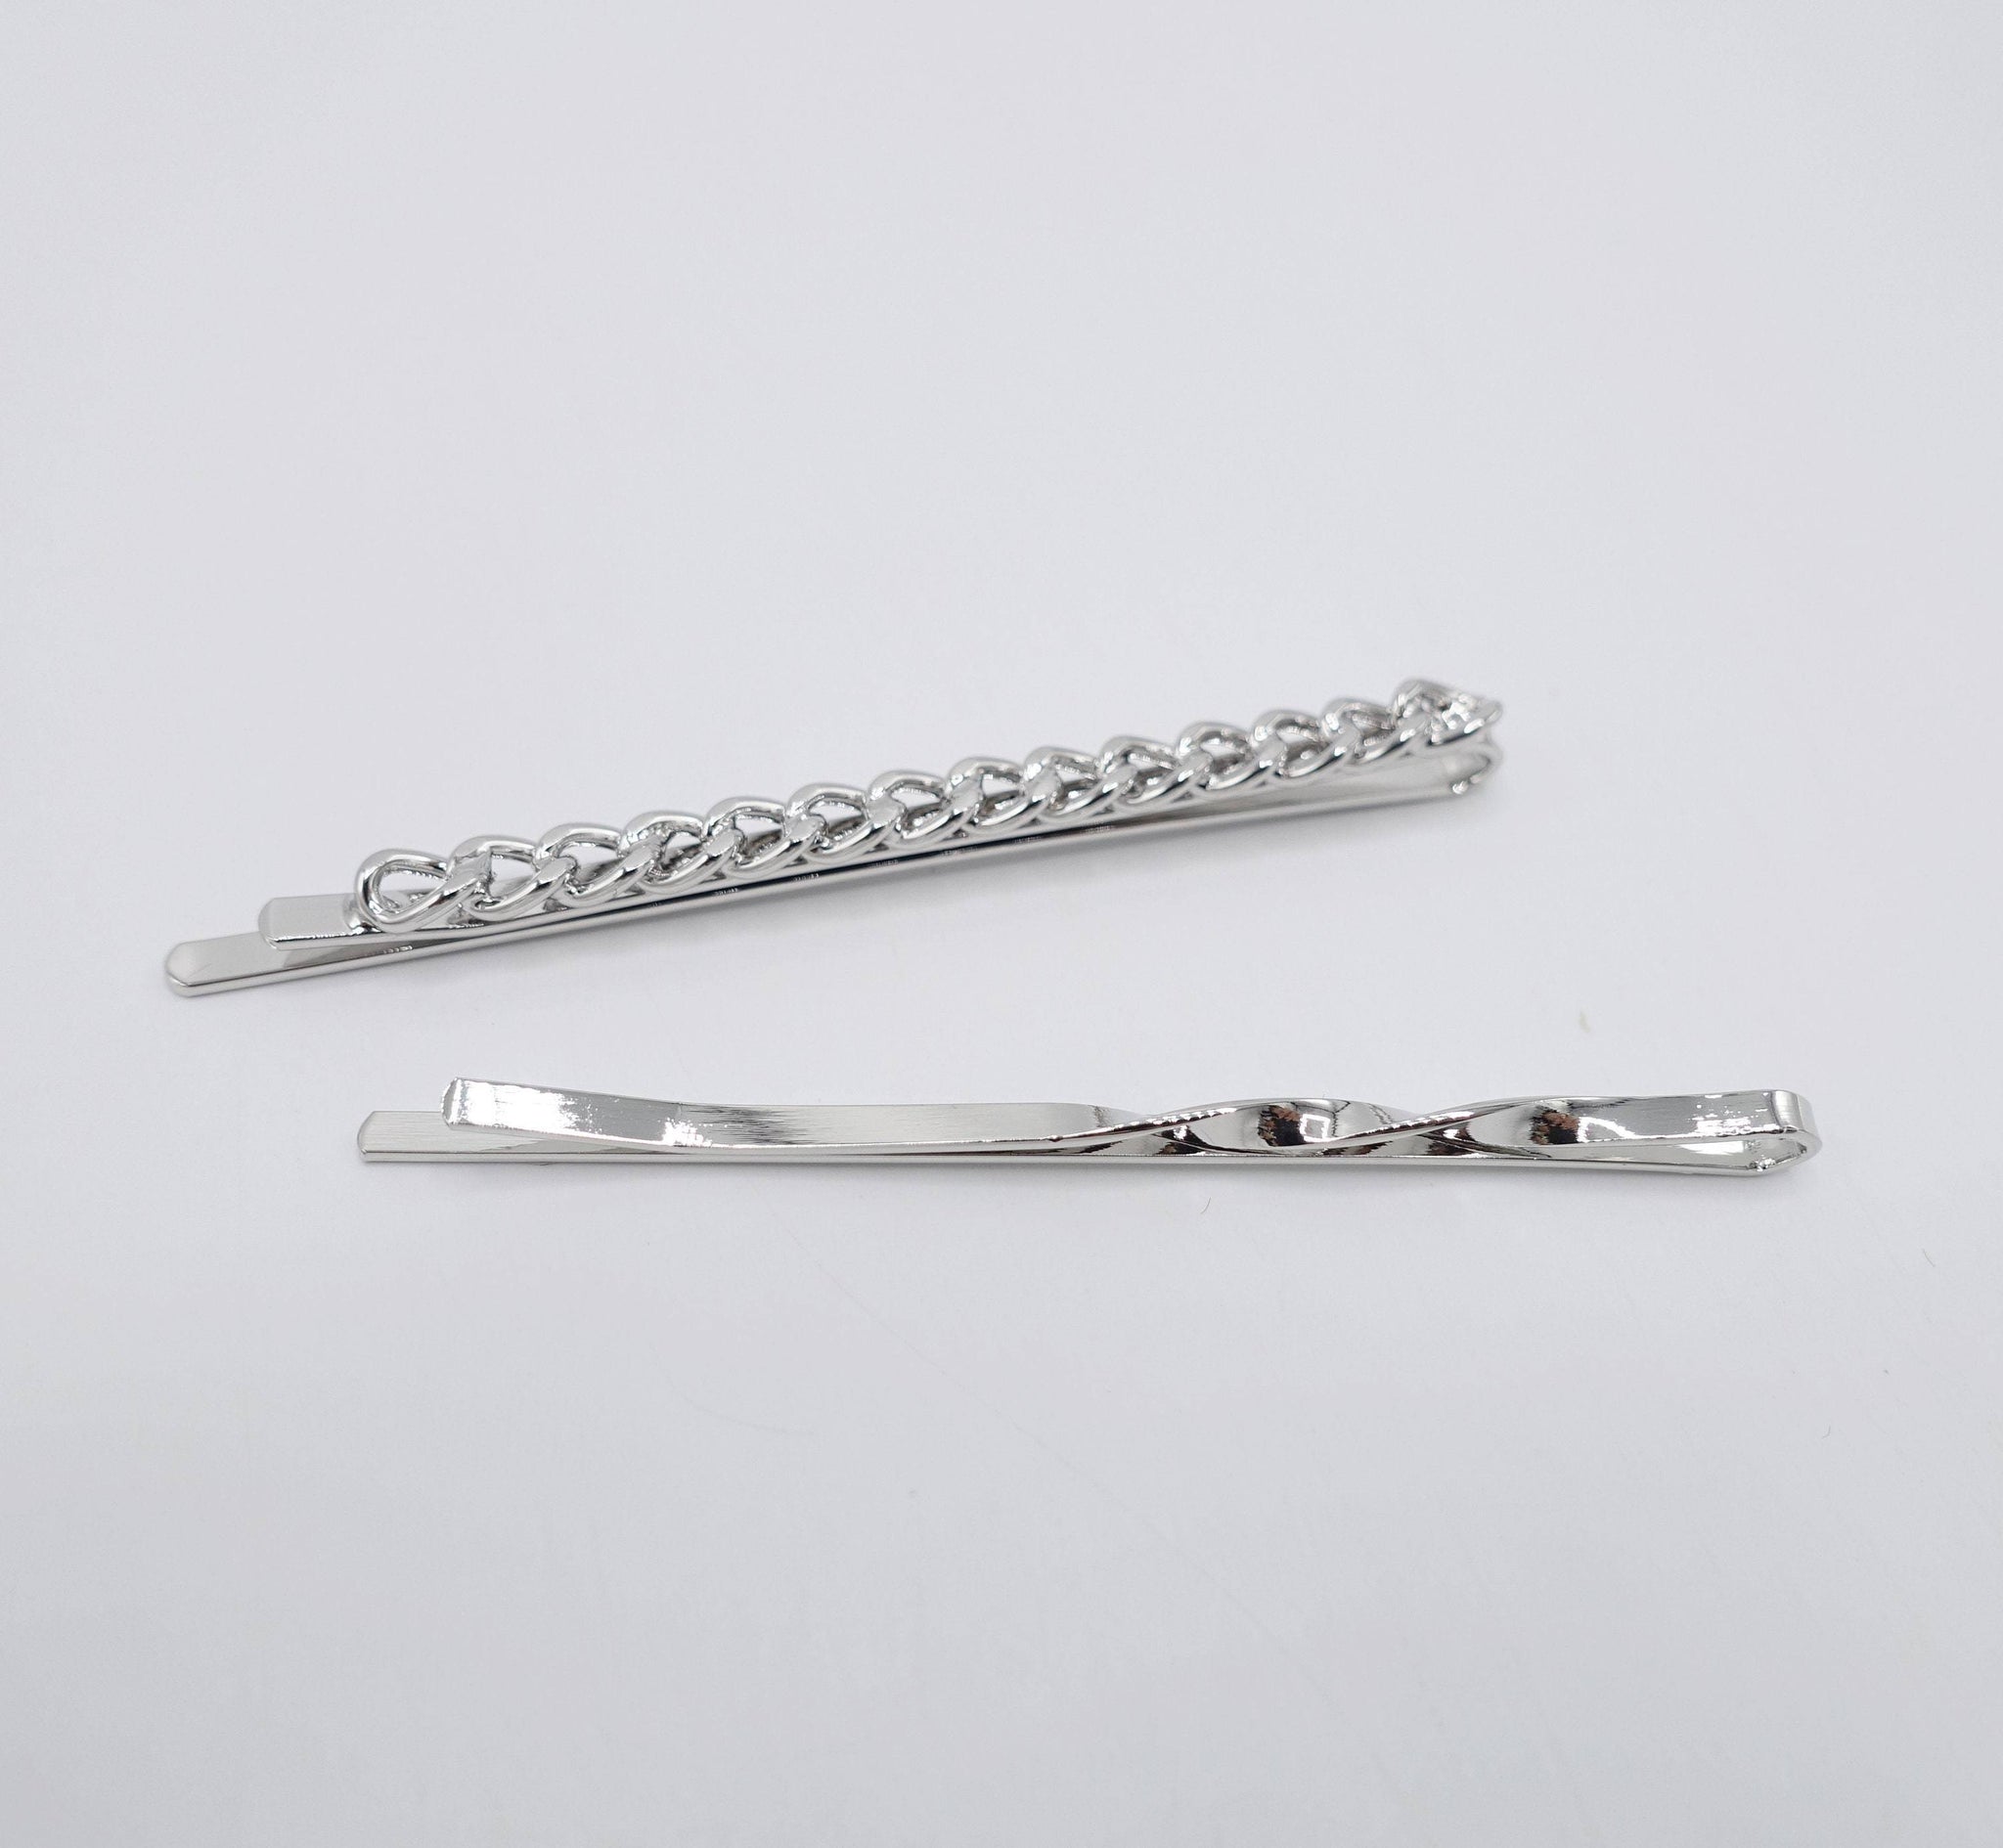 VeryShine chain hair clip set